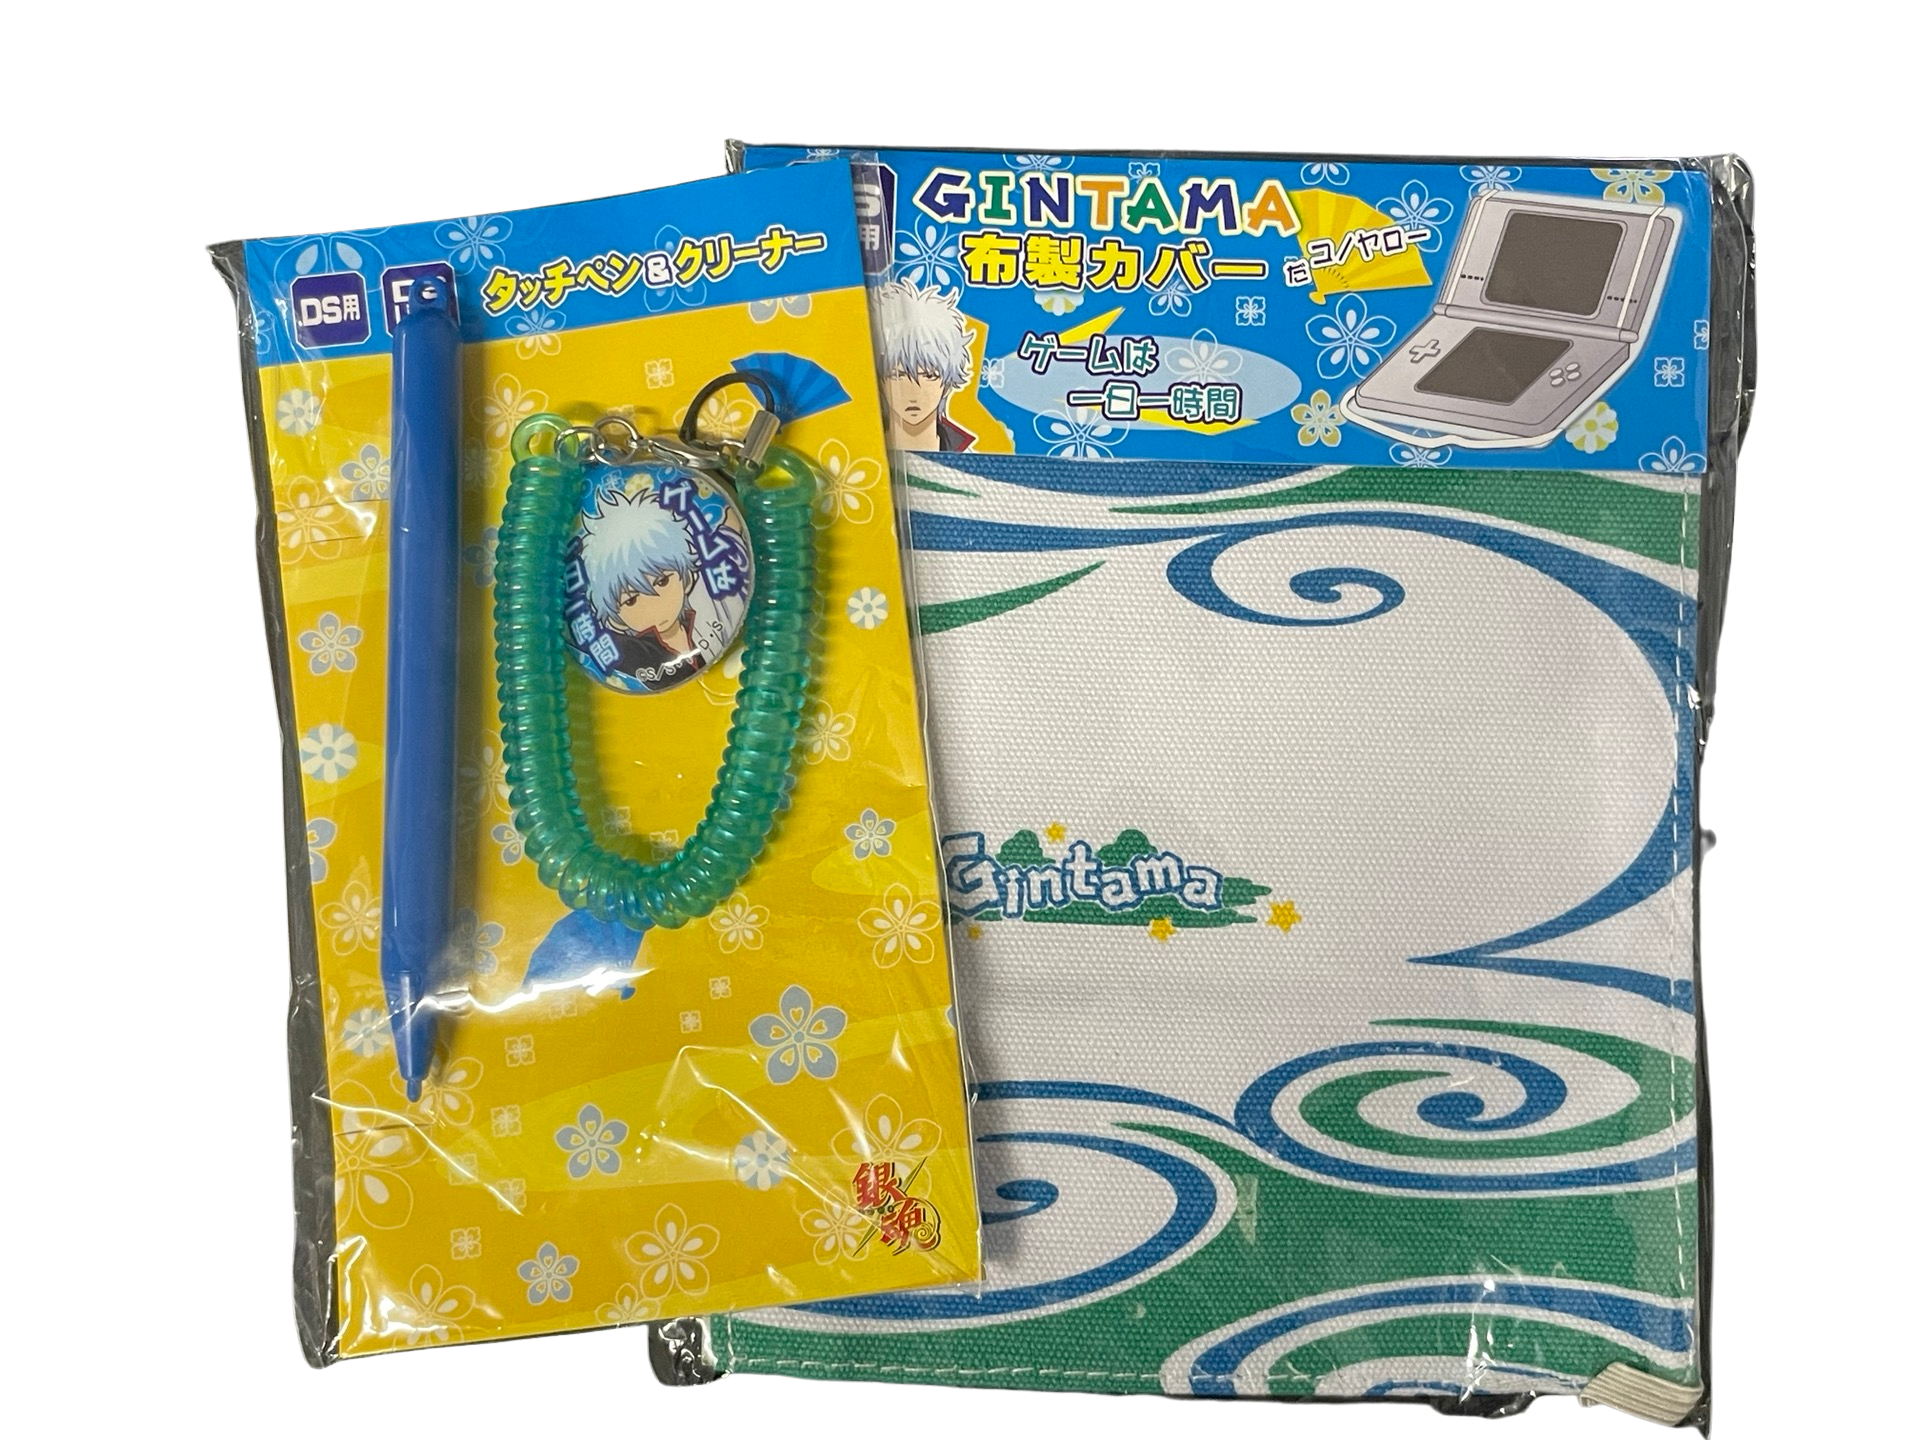 Gintama Nintendo DS Lite pennino + laccetto + cover stoffa Japan Anime Manga freeshipping - Retrofollie